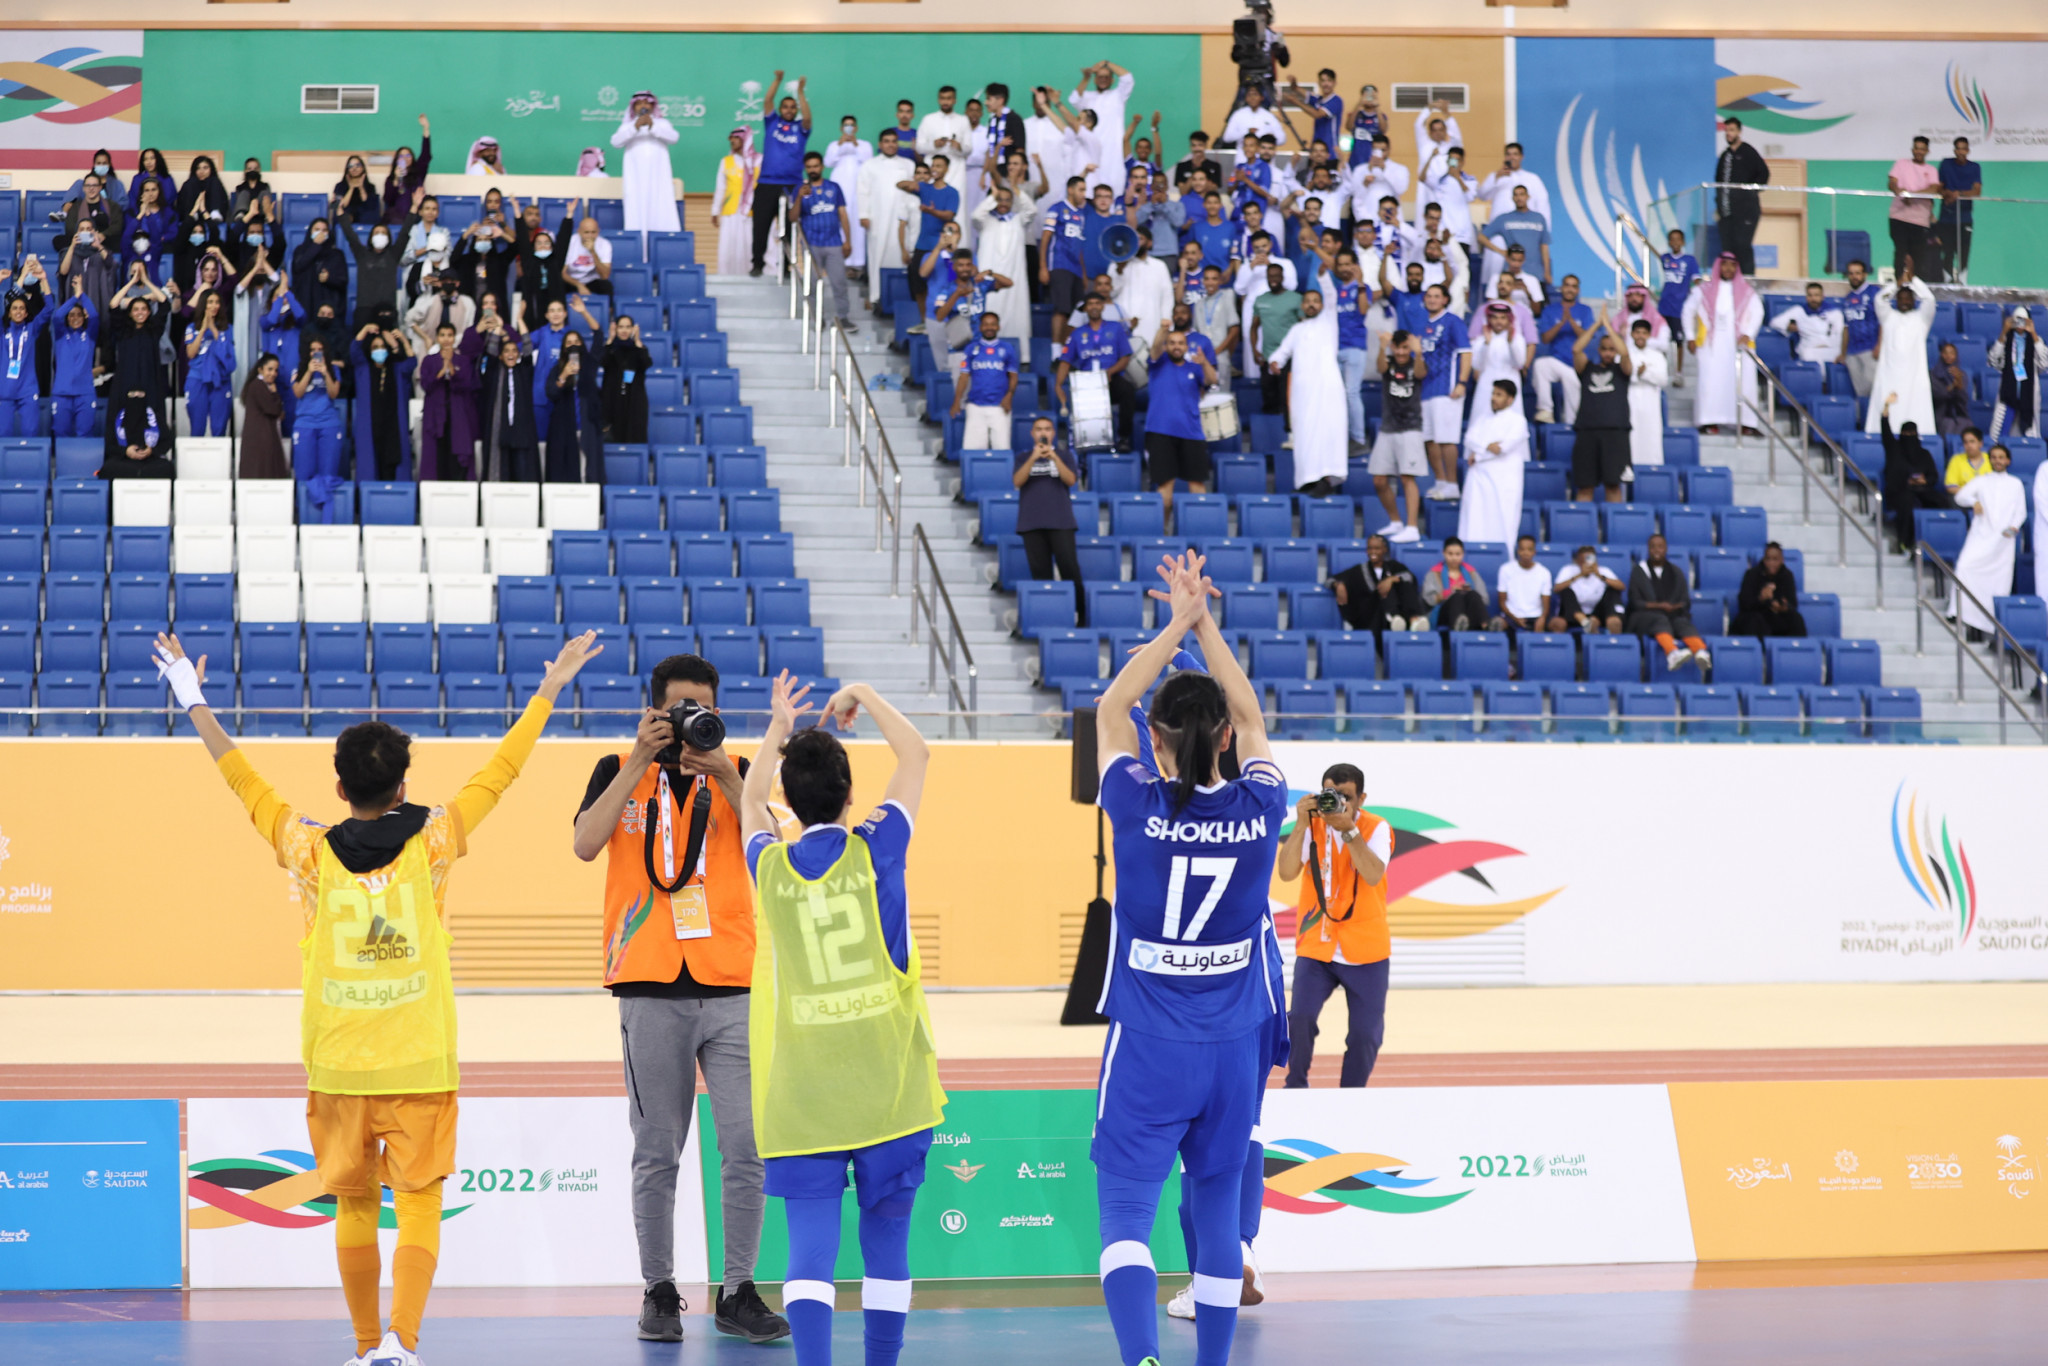 Al-Hilal secured a 5-4 win over Al-Nassr to progress to the women's futsal final ©Saudi Games